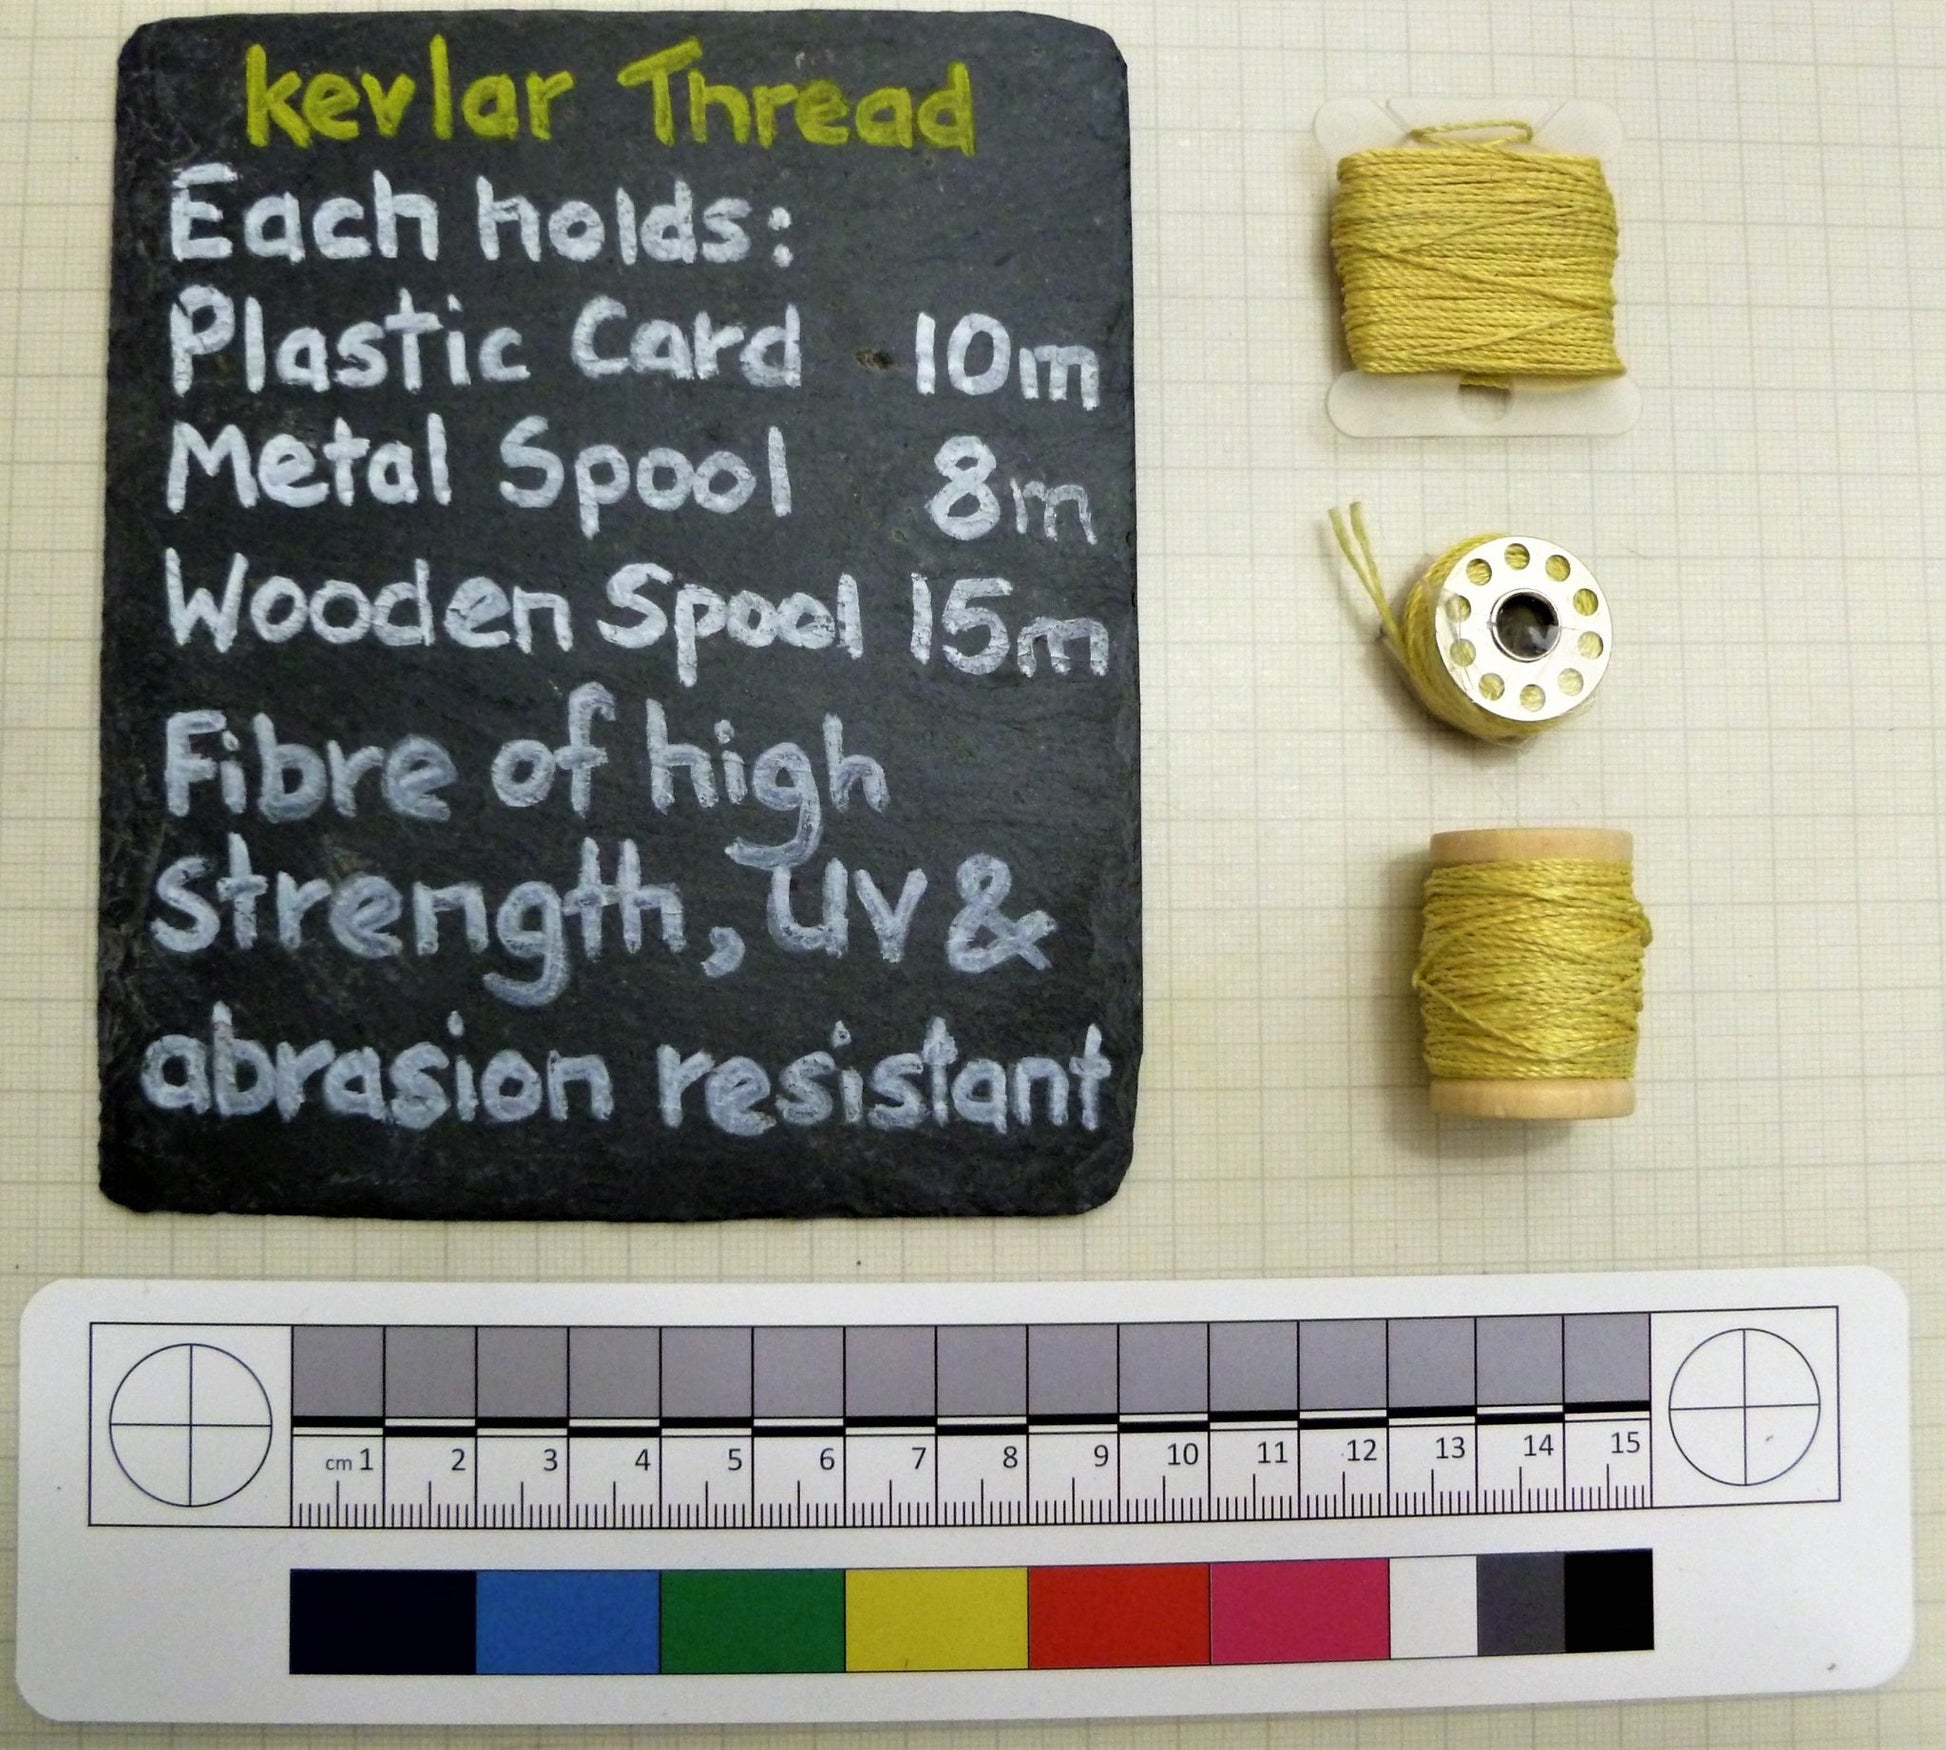 Kevlar Thread choose from 3 lengths 8m, 10m or 15m